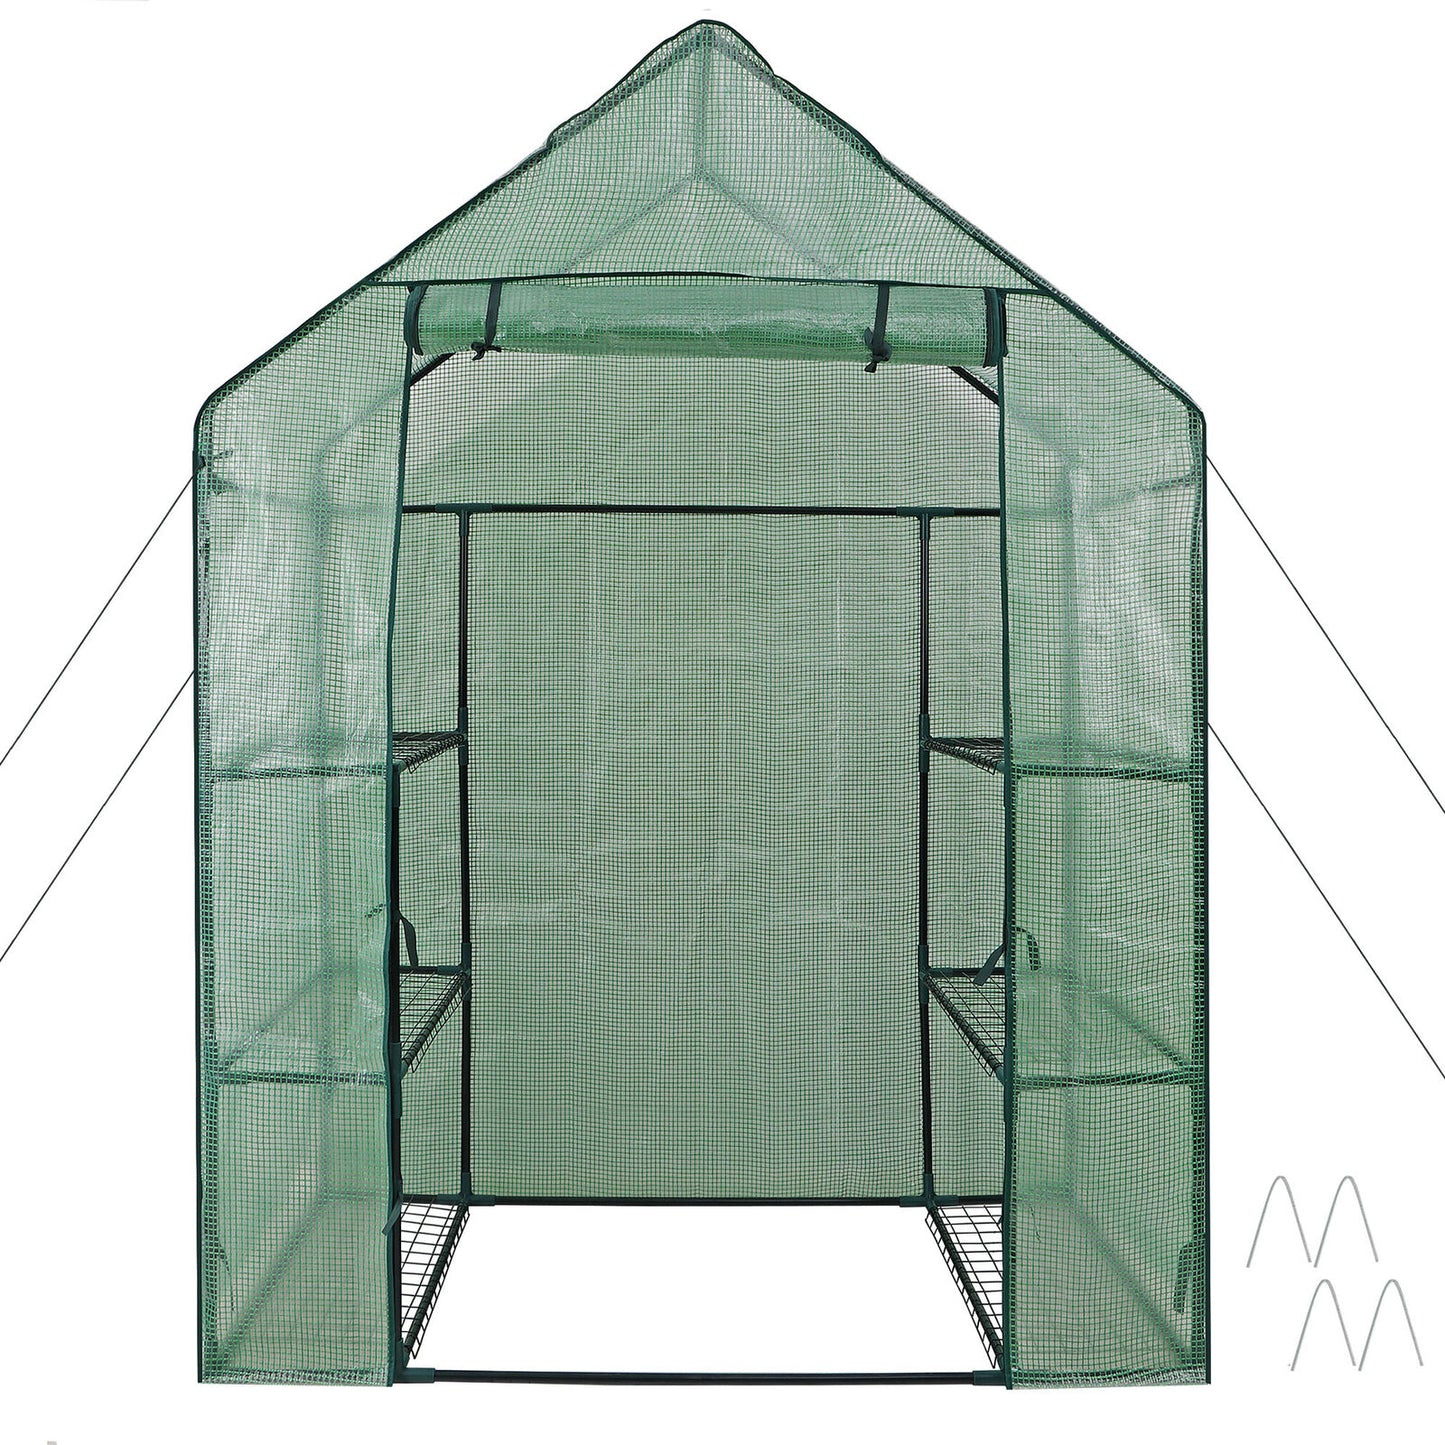 6 Shelves 3 Tiers Greenhouse Portable Mini Walk In Outdoor MINI Planter House